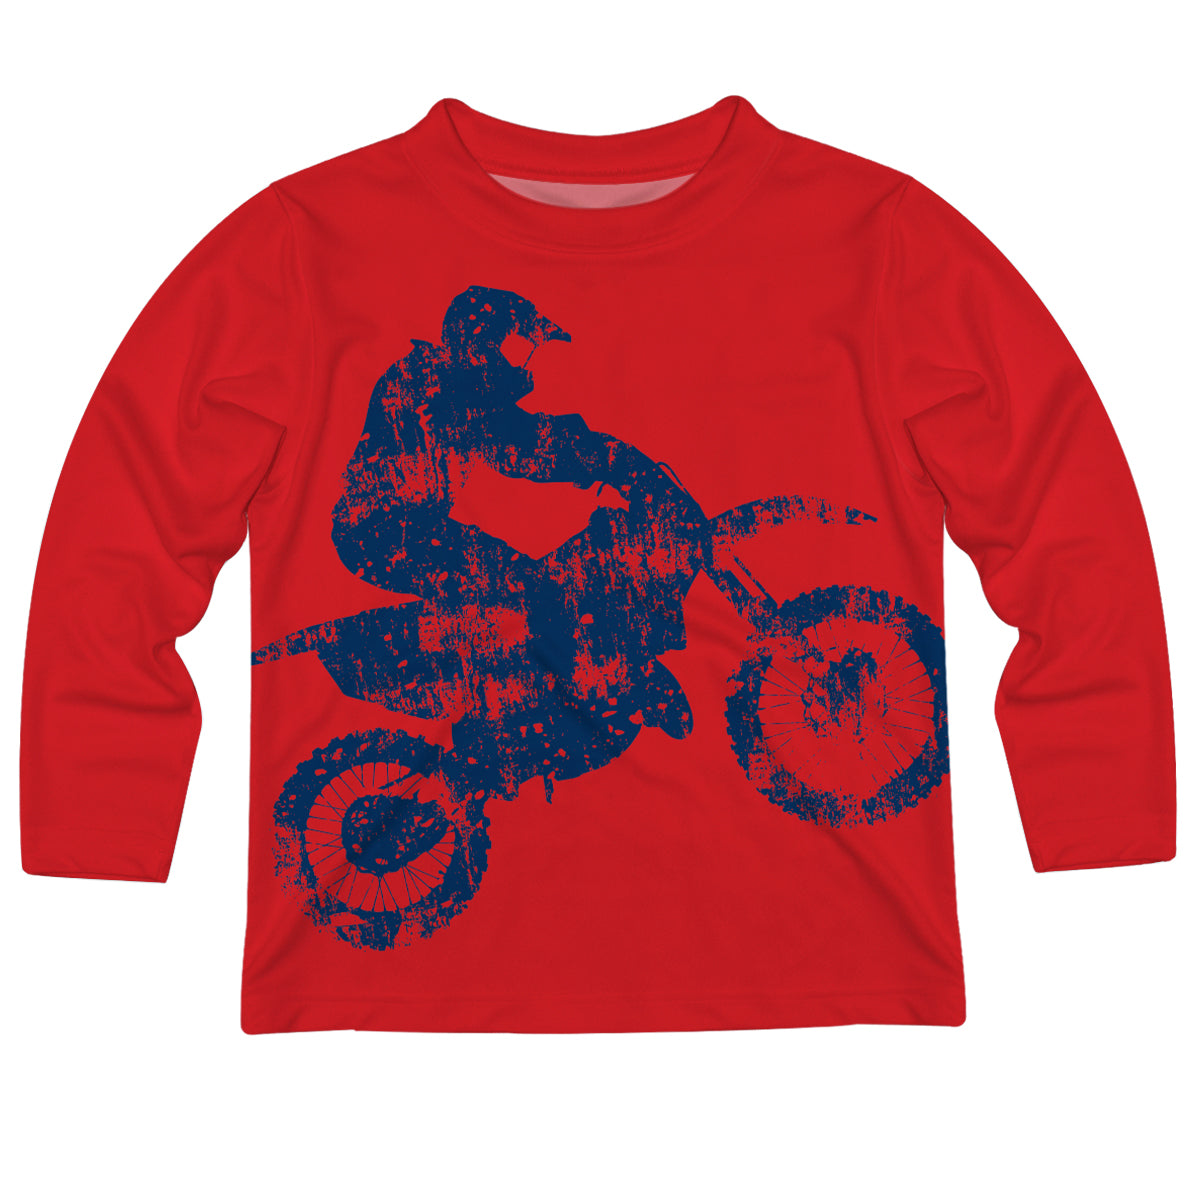 Motorcycle Name Red Long Sleeve Tee Shirt